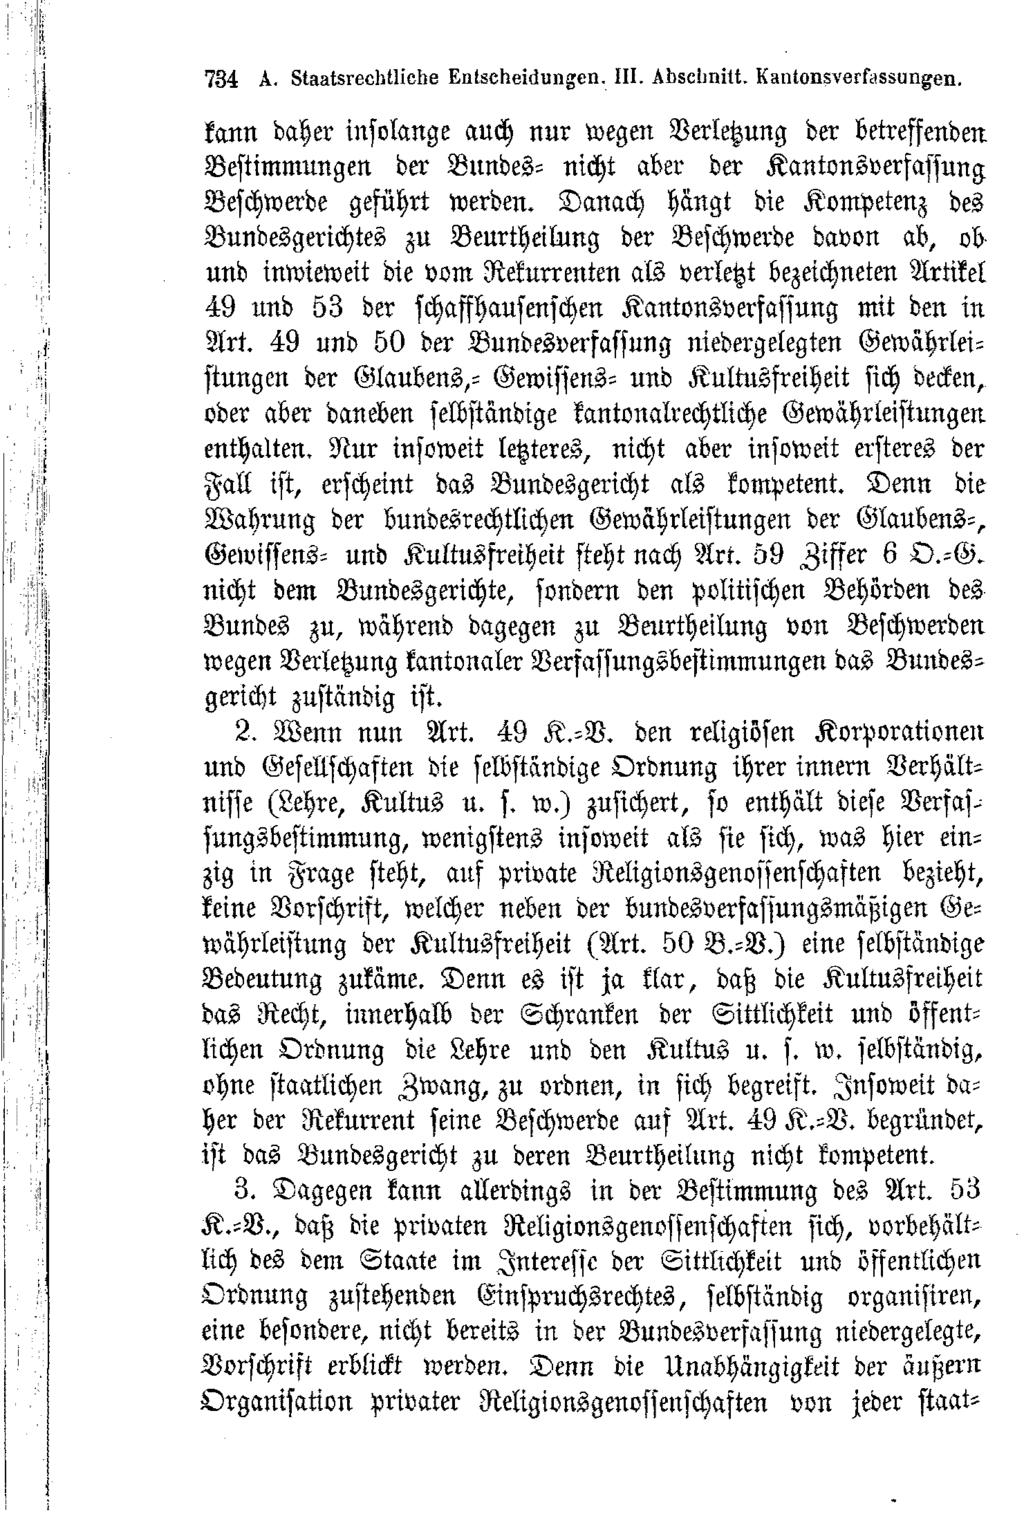 734 A. Staatsrechtliche Entscheidungen. III. Abschnitt. Kantonsverfassungen.